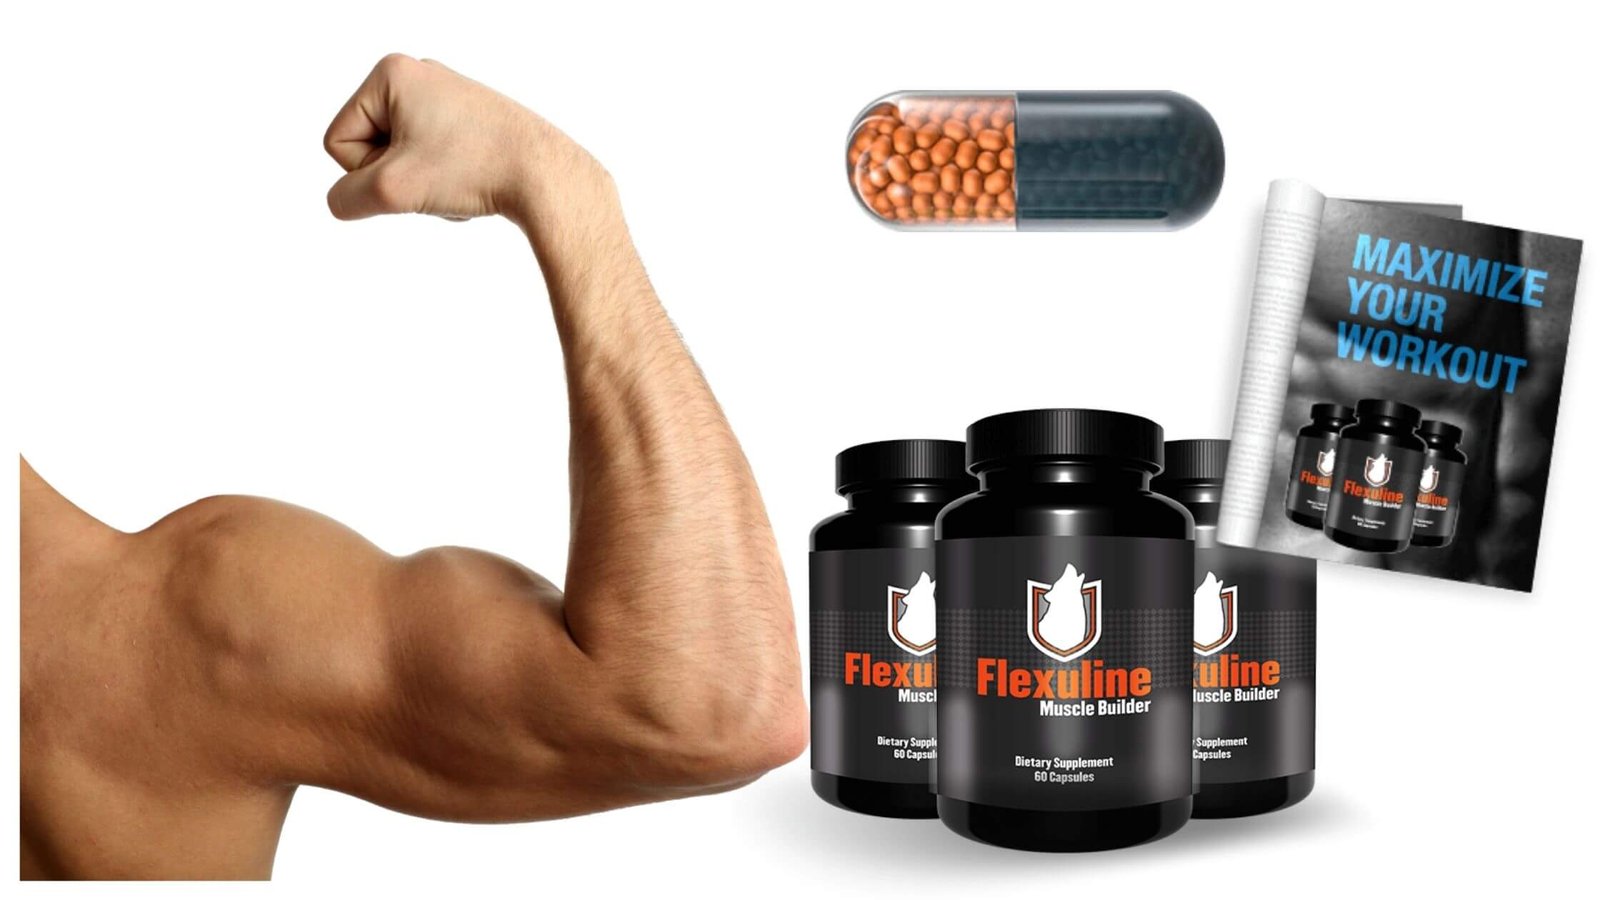 Flexuline Muscle Builder supplement